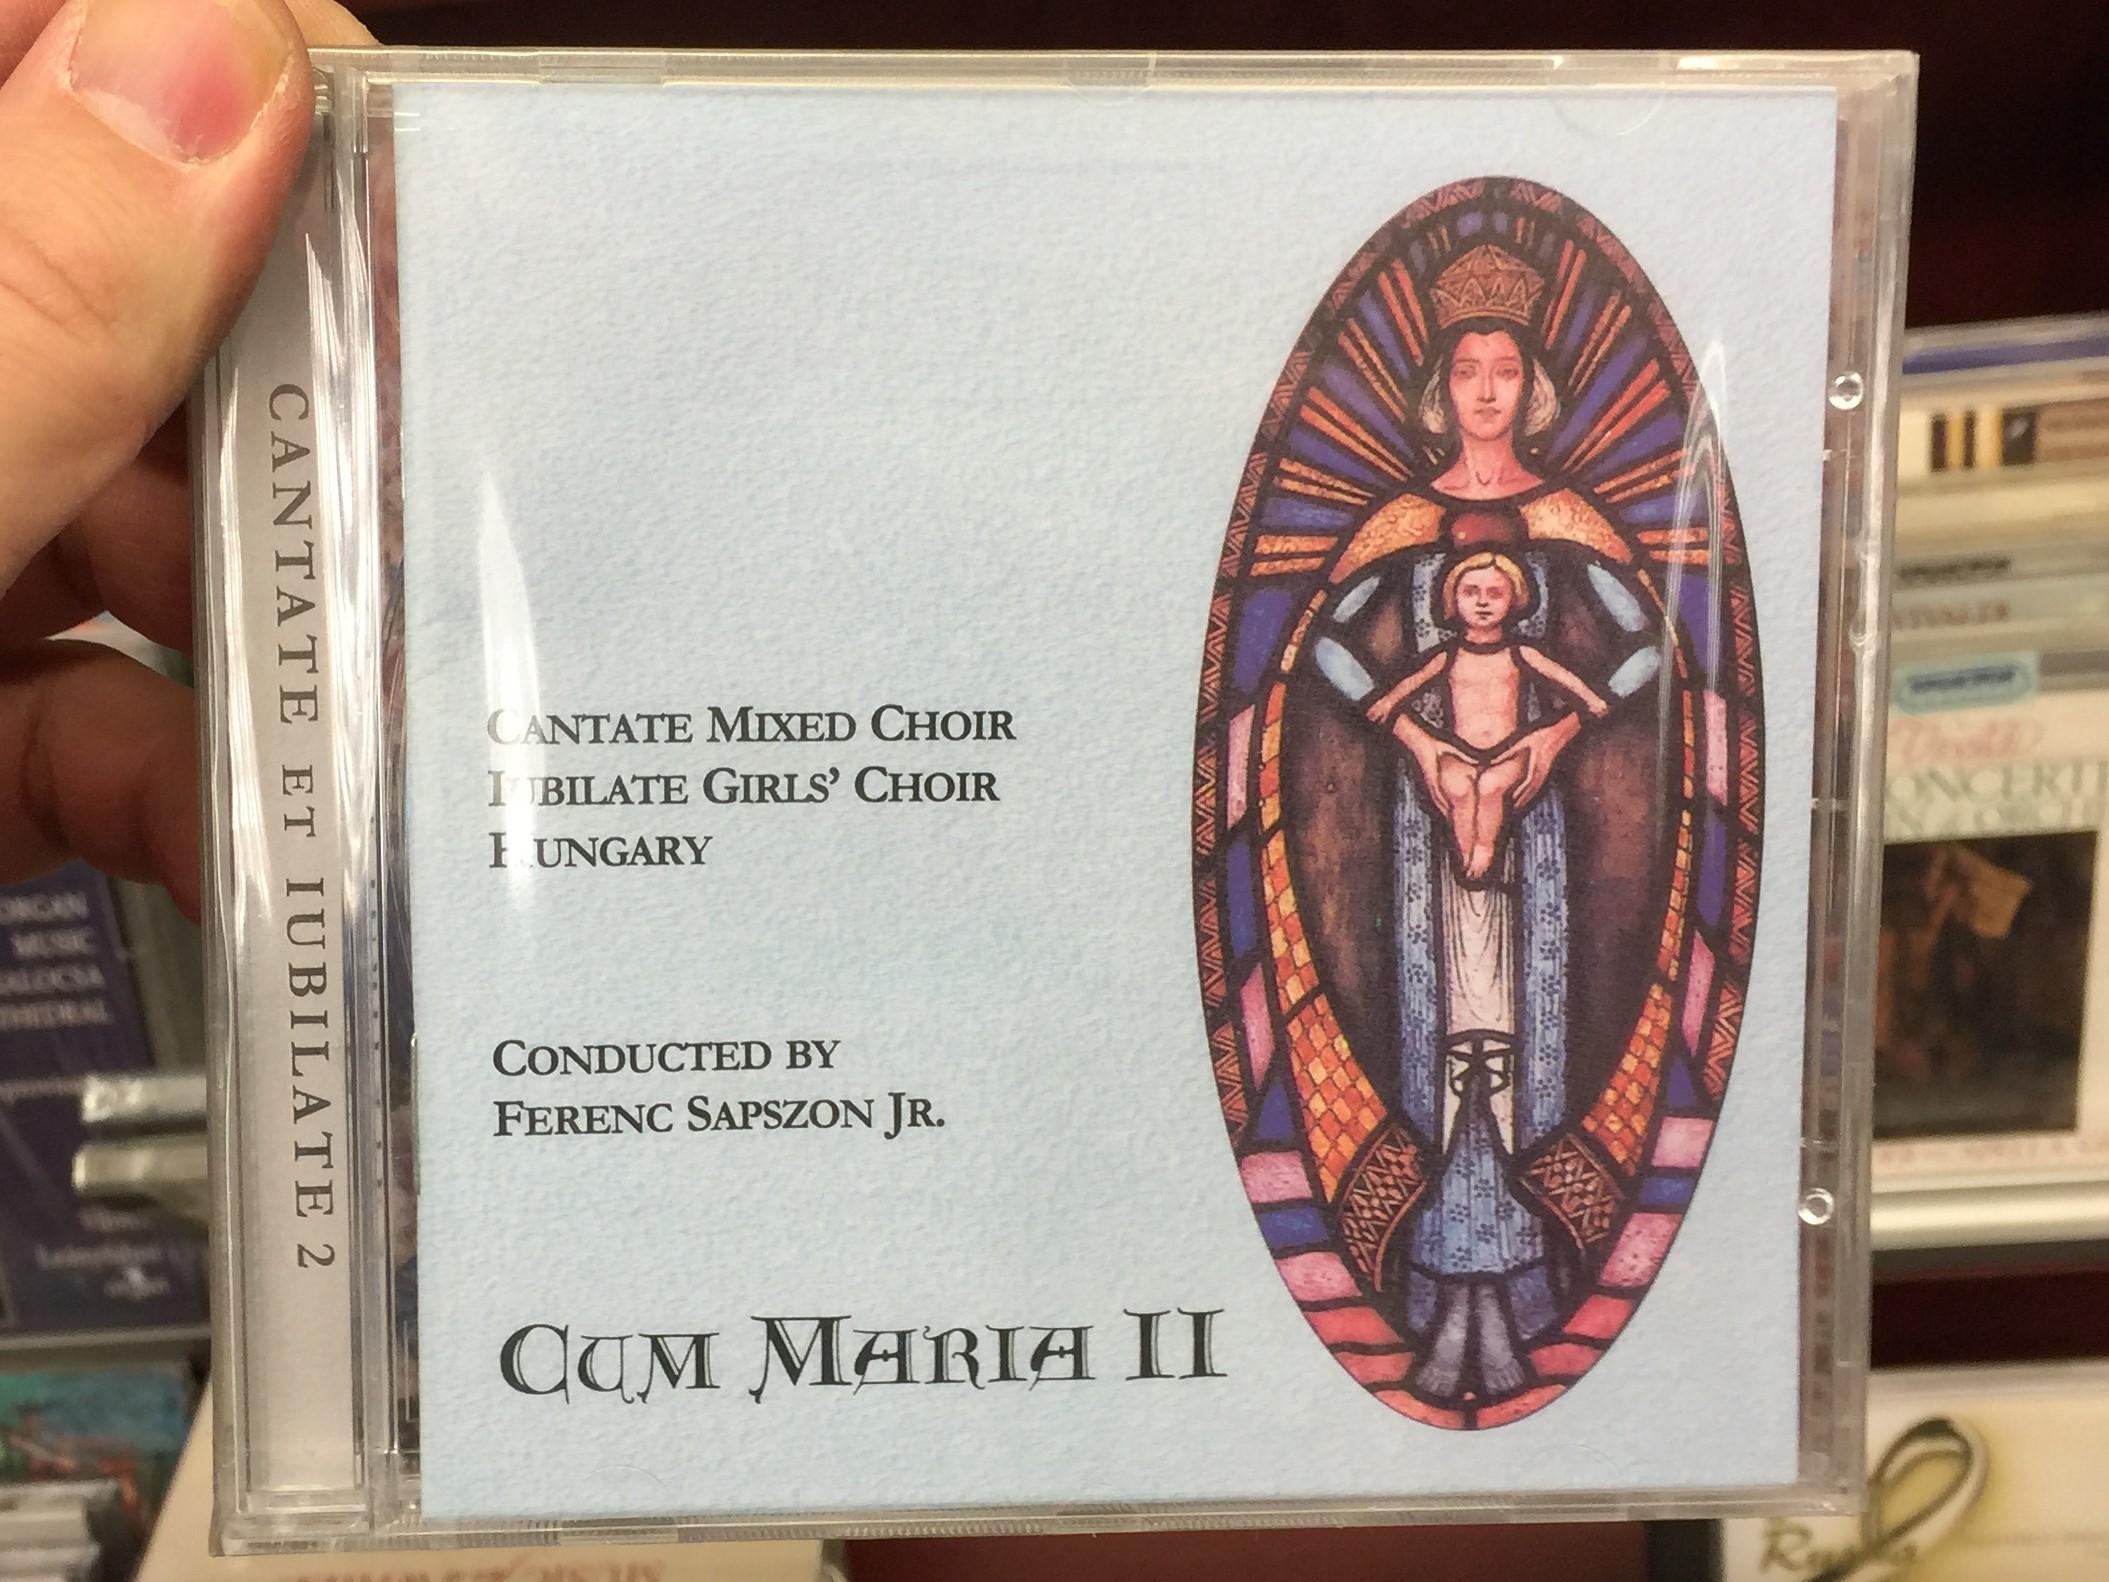 cantate-mixed-choir-jubilate-girl-s-choir-hungary-conducted-by-ferenc-sapszon-jr.-cum-maria-ii-audio-cd-5999880138093-1-.jpg